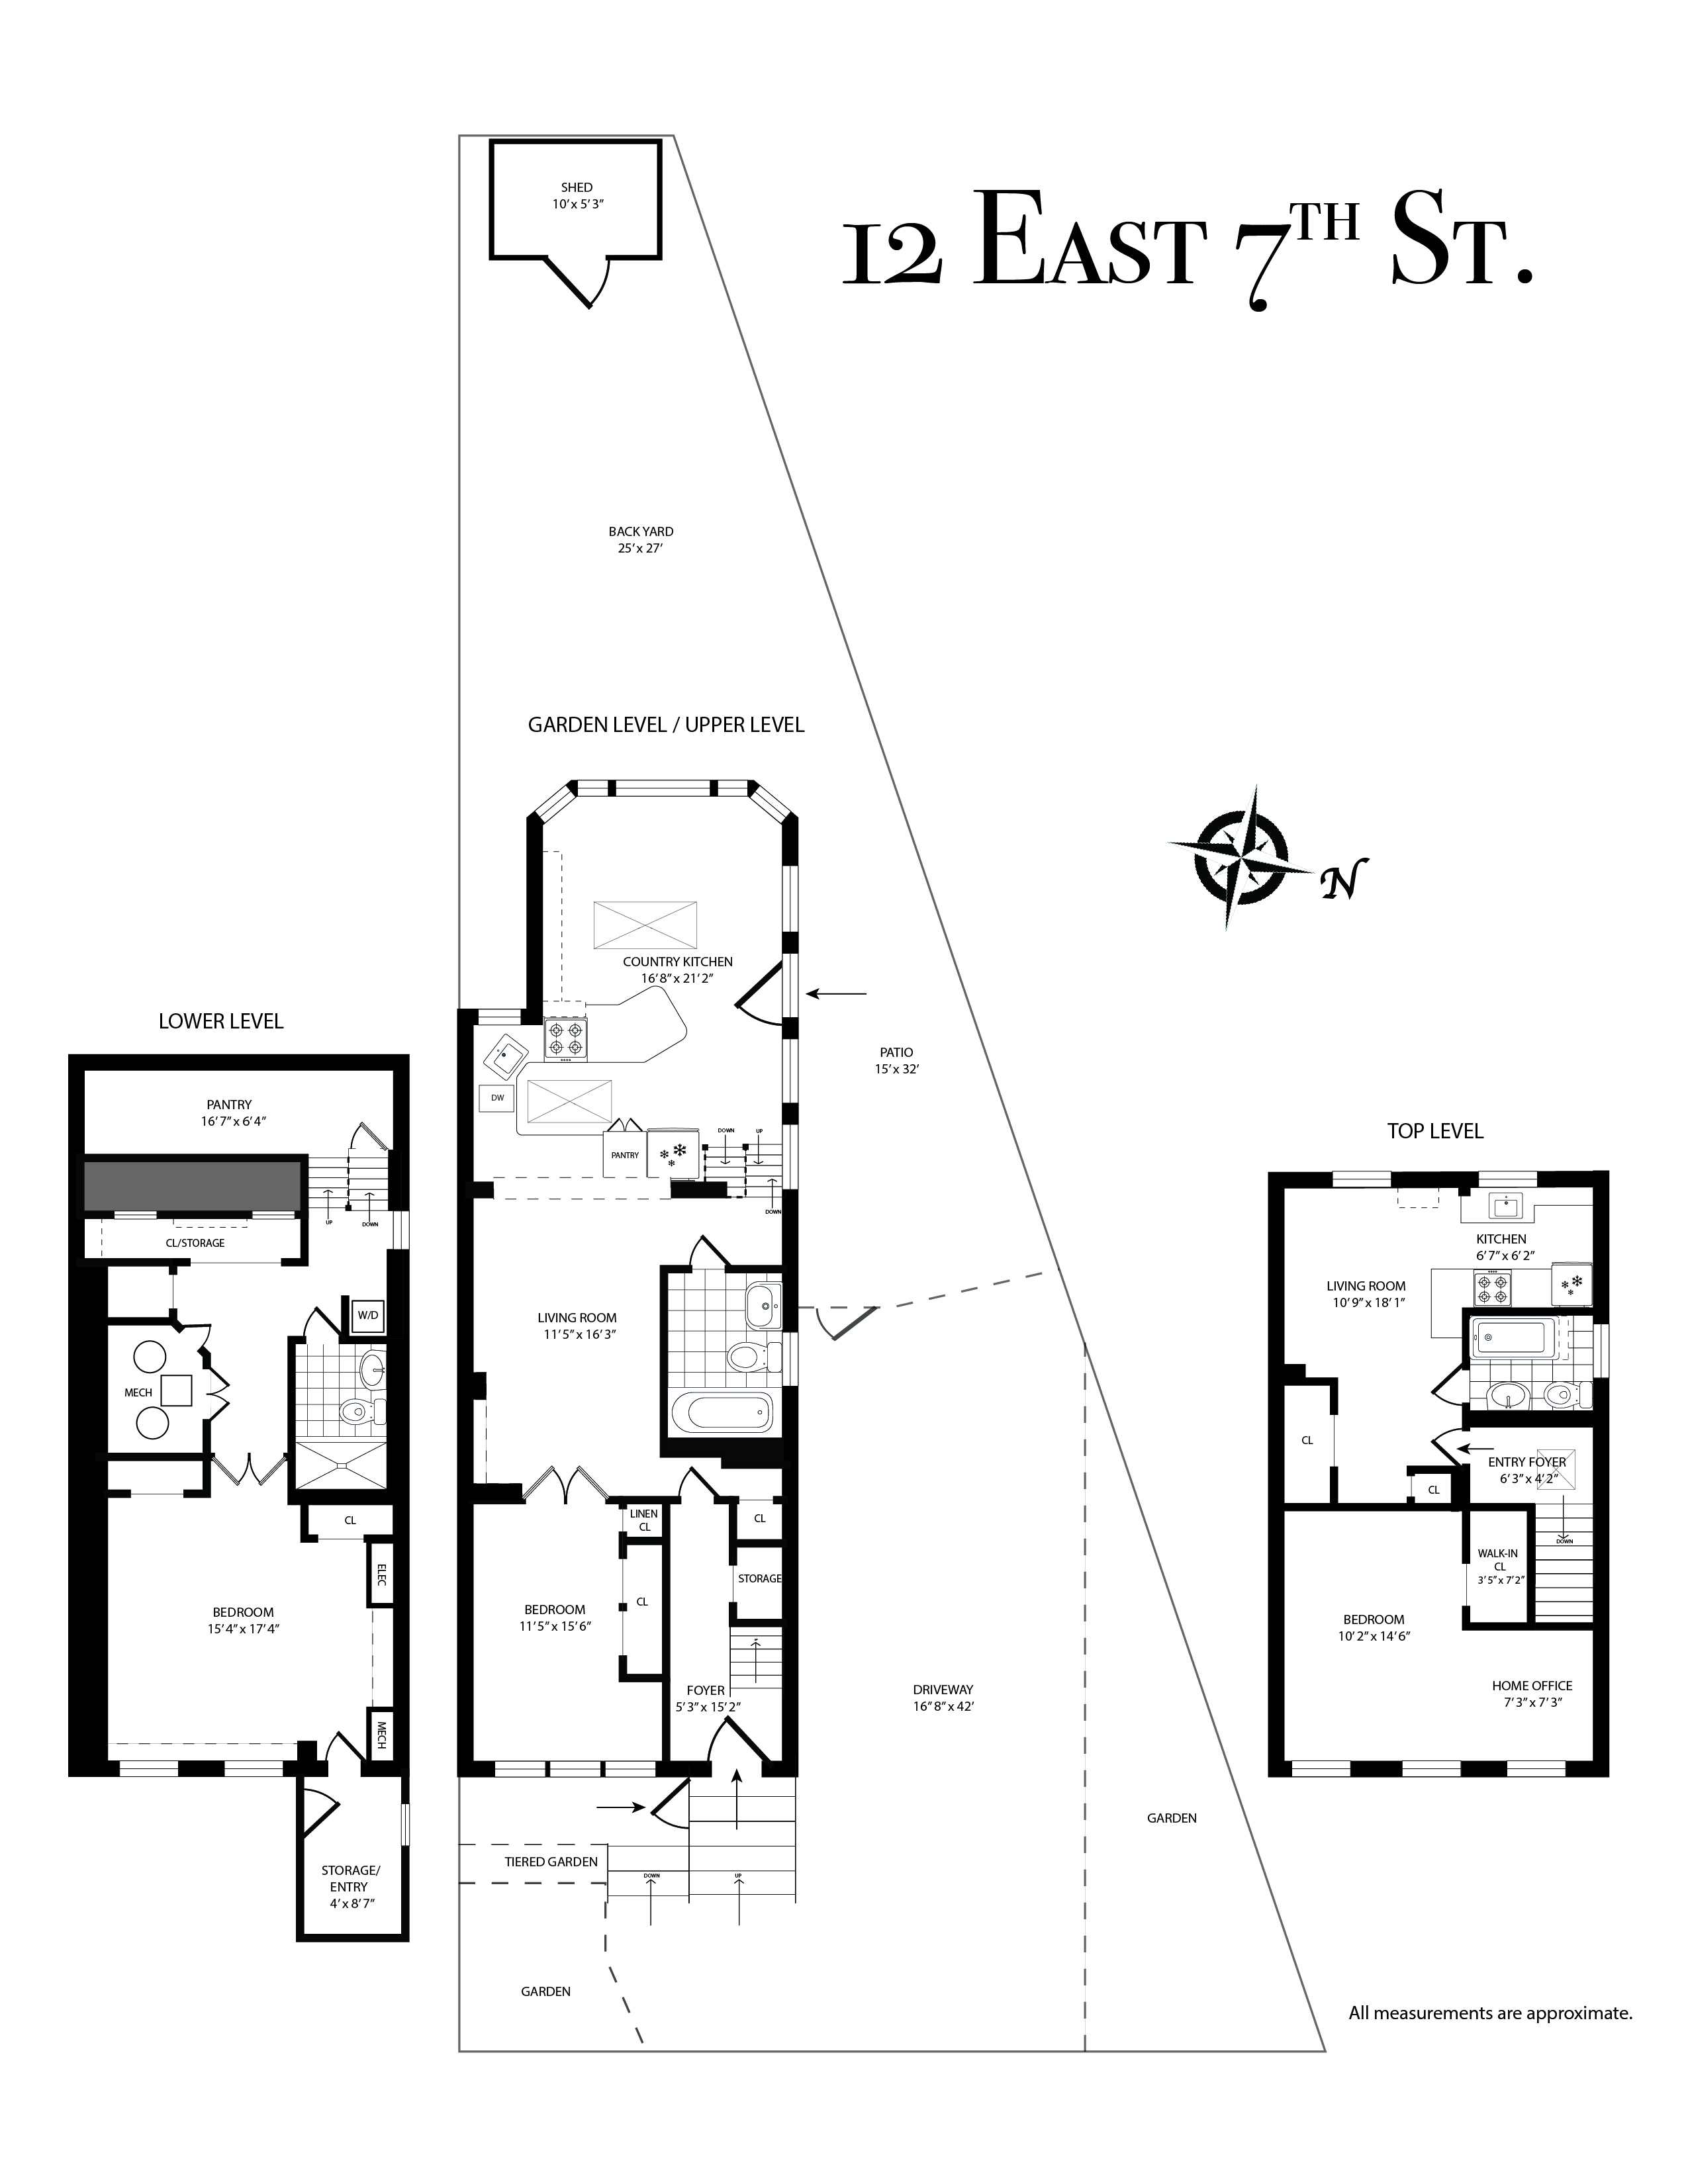 Floorplan of 12 E 7th St